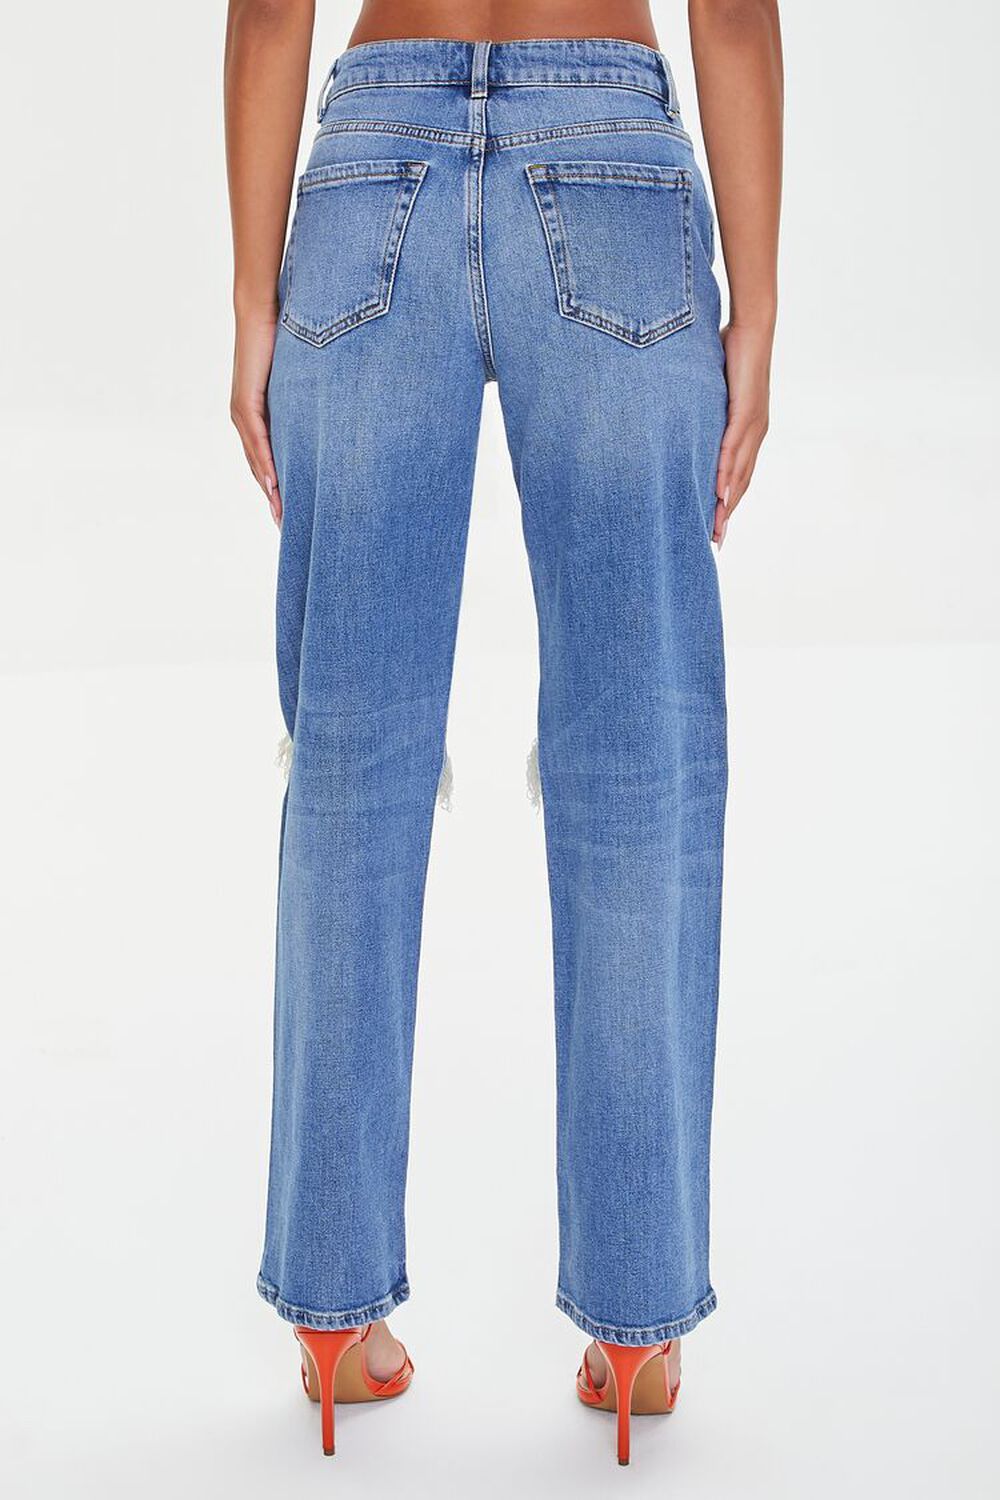 Hemp 4% High-Rise Straight-Leg Jeans